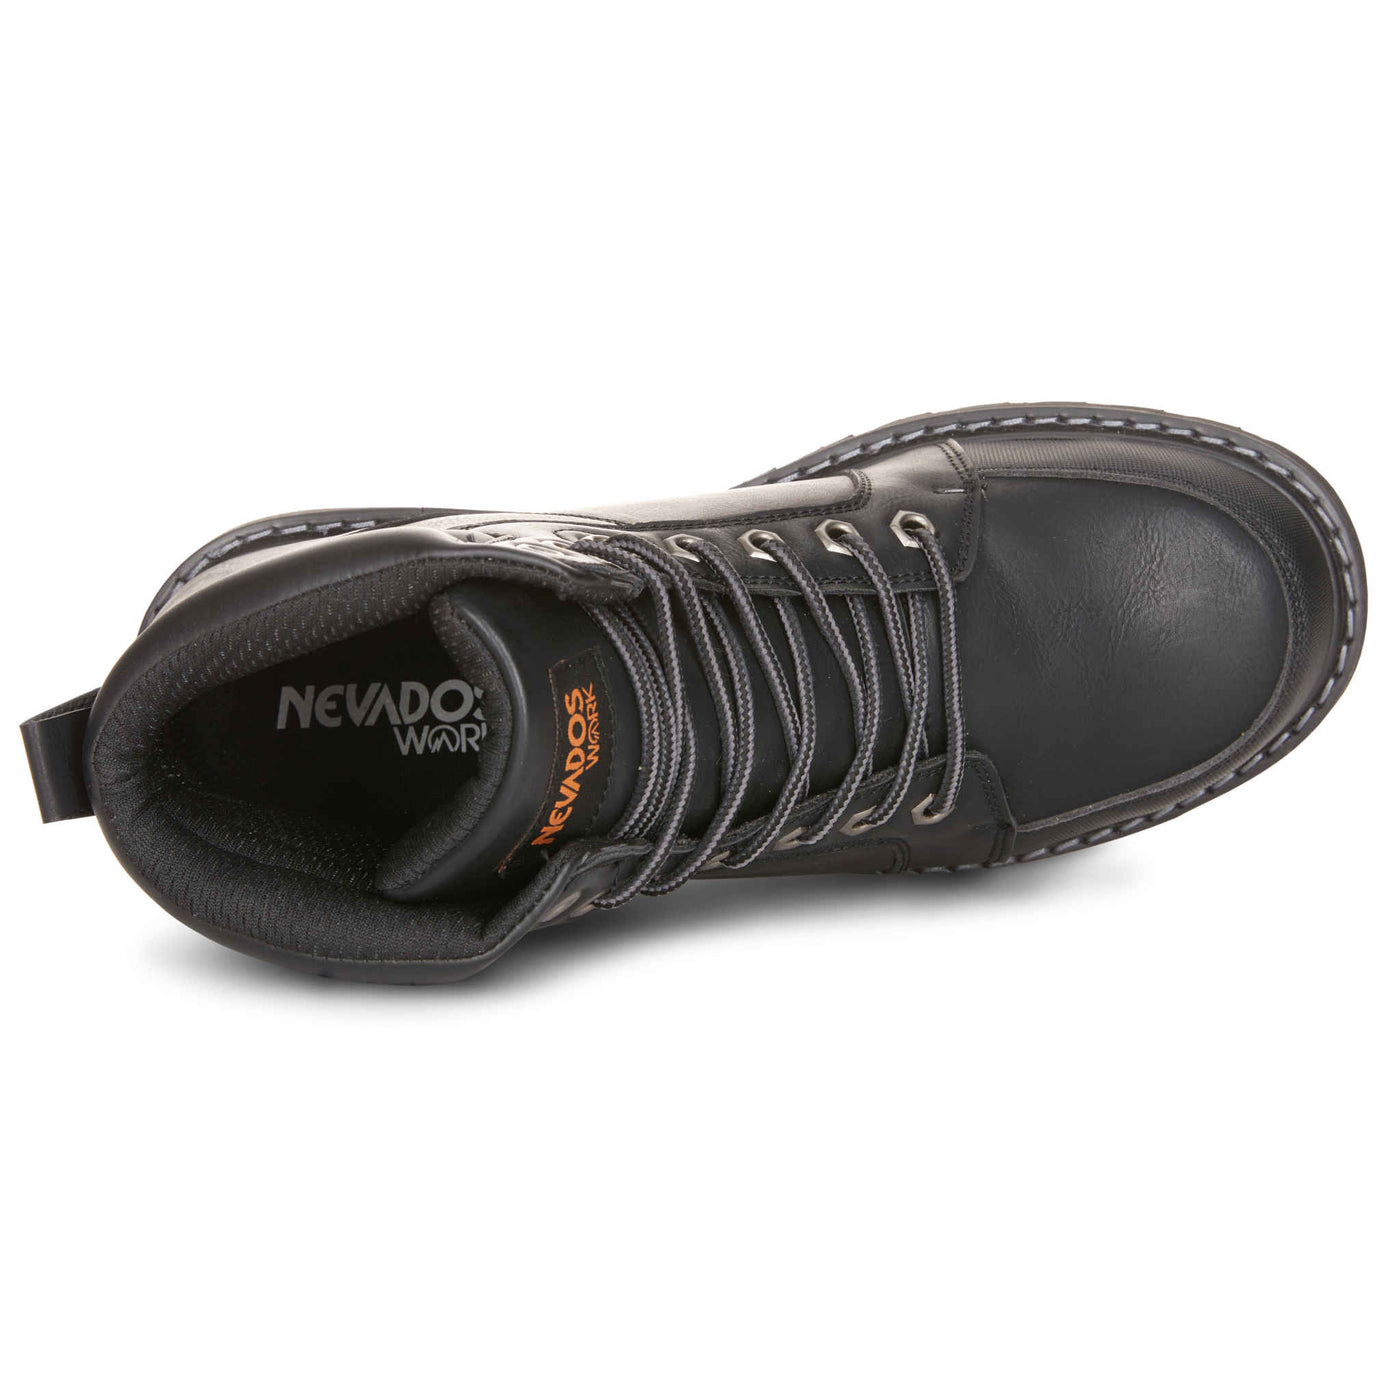 Nevados Men's Work Boots Cross Street Black